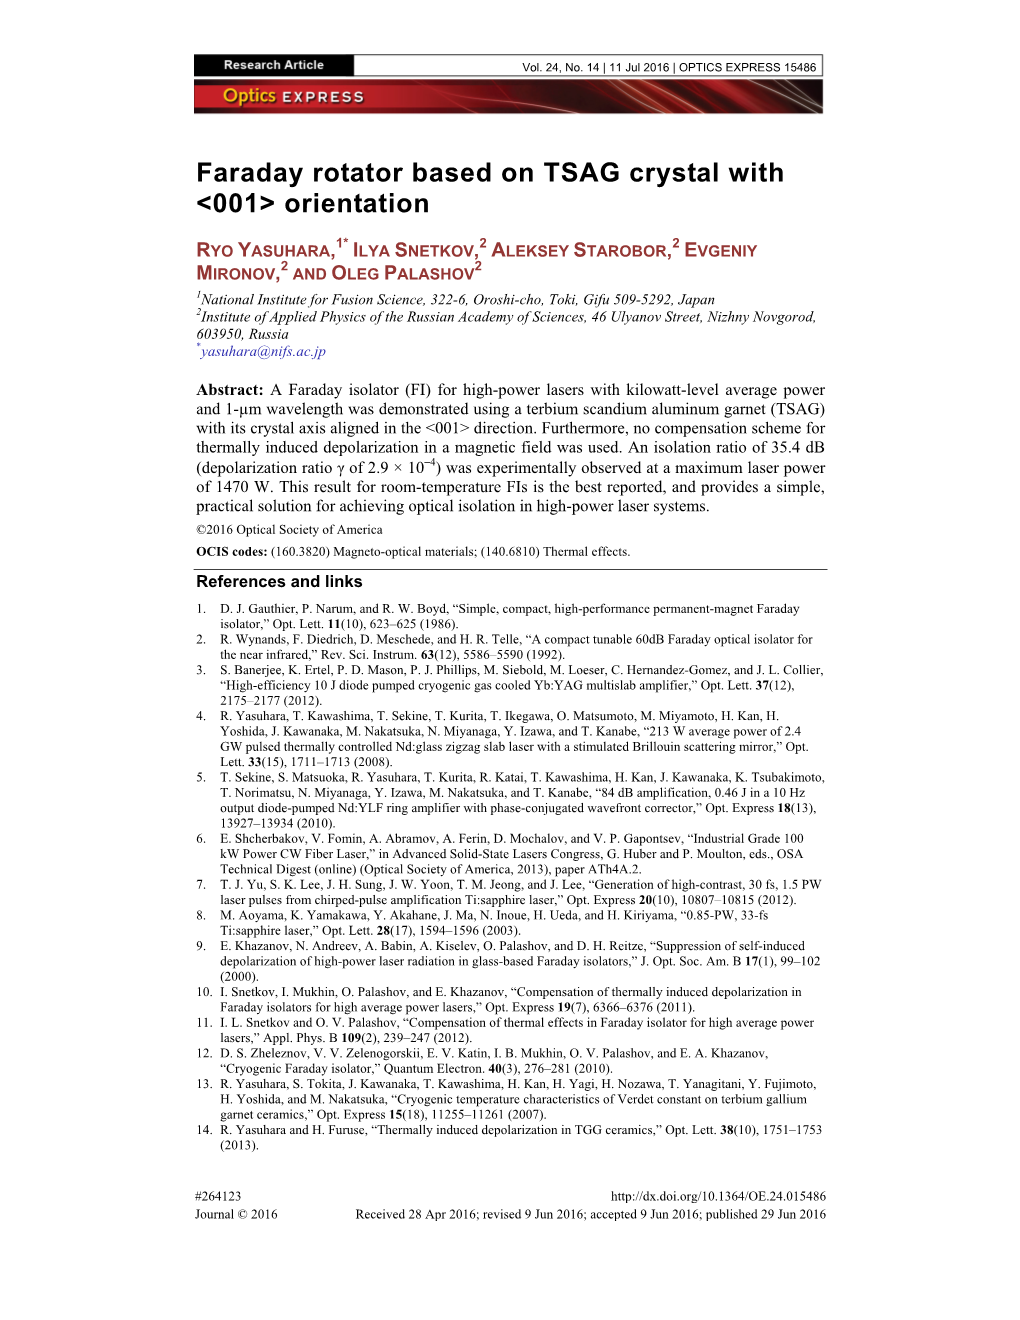 Faraday Rotator Based on TSAG Crystal with &lt;001&gt; Orientation